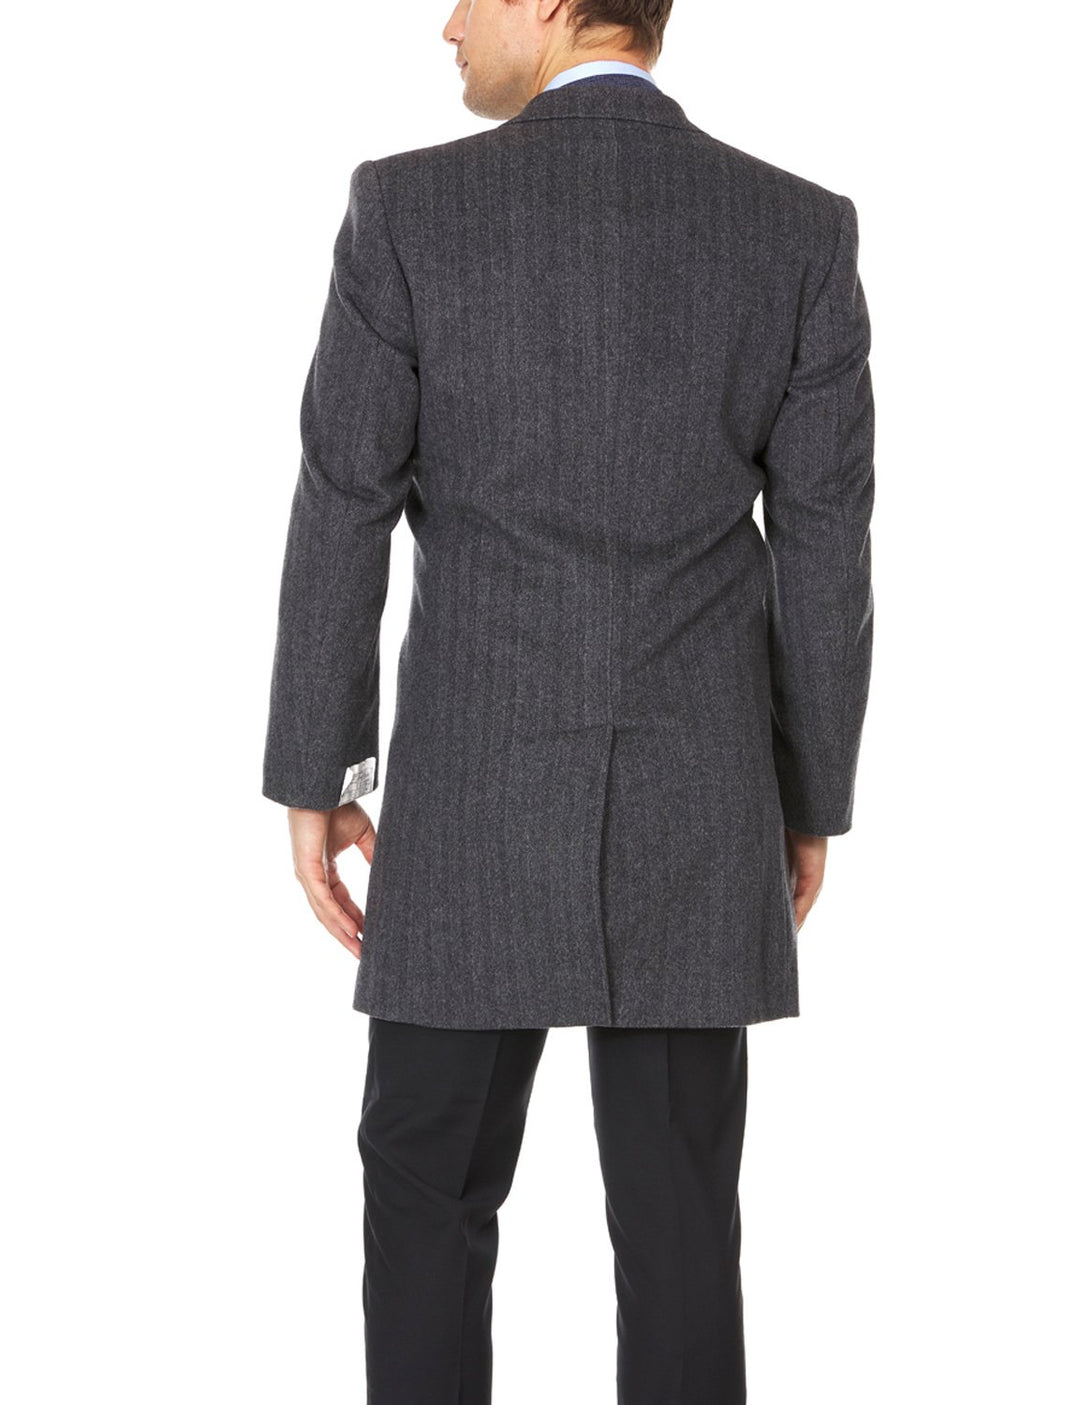 Prontomoda Men's Gray Luxury Wool/Cashmere Three-quarter Length Topcoat-CLEARANCE - FINAL SALE